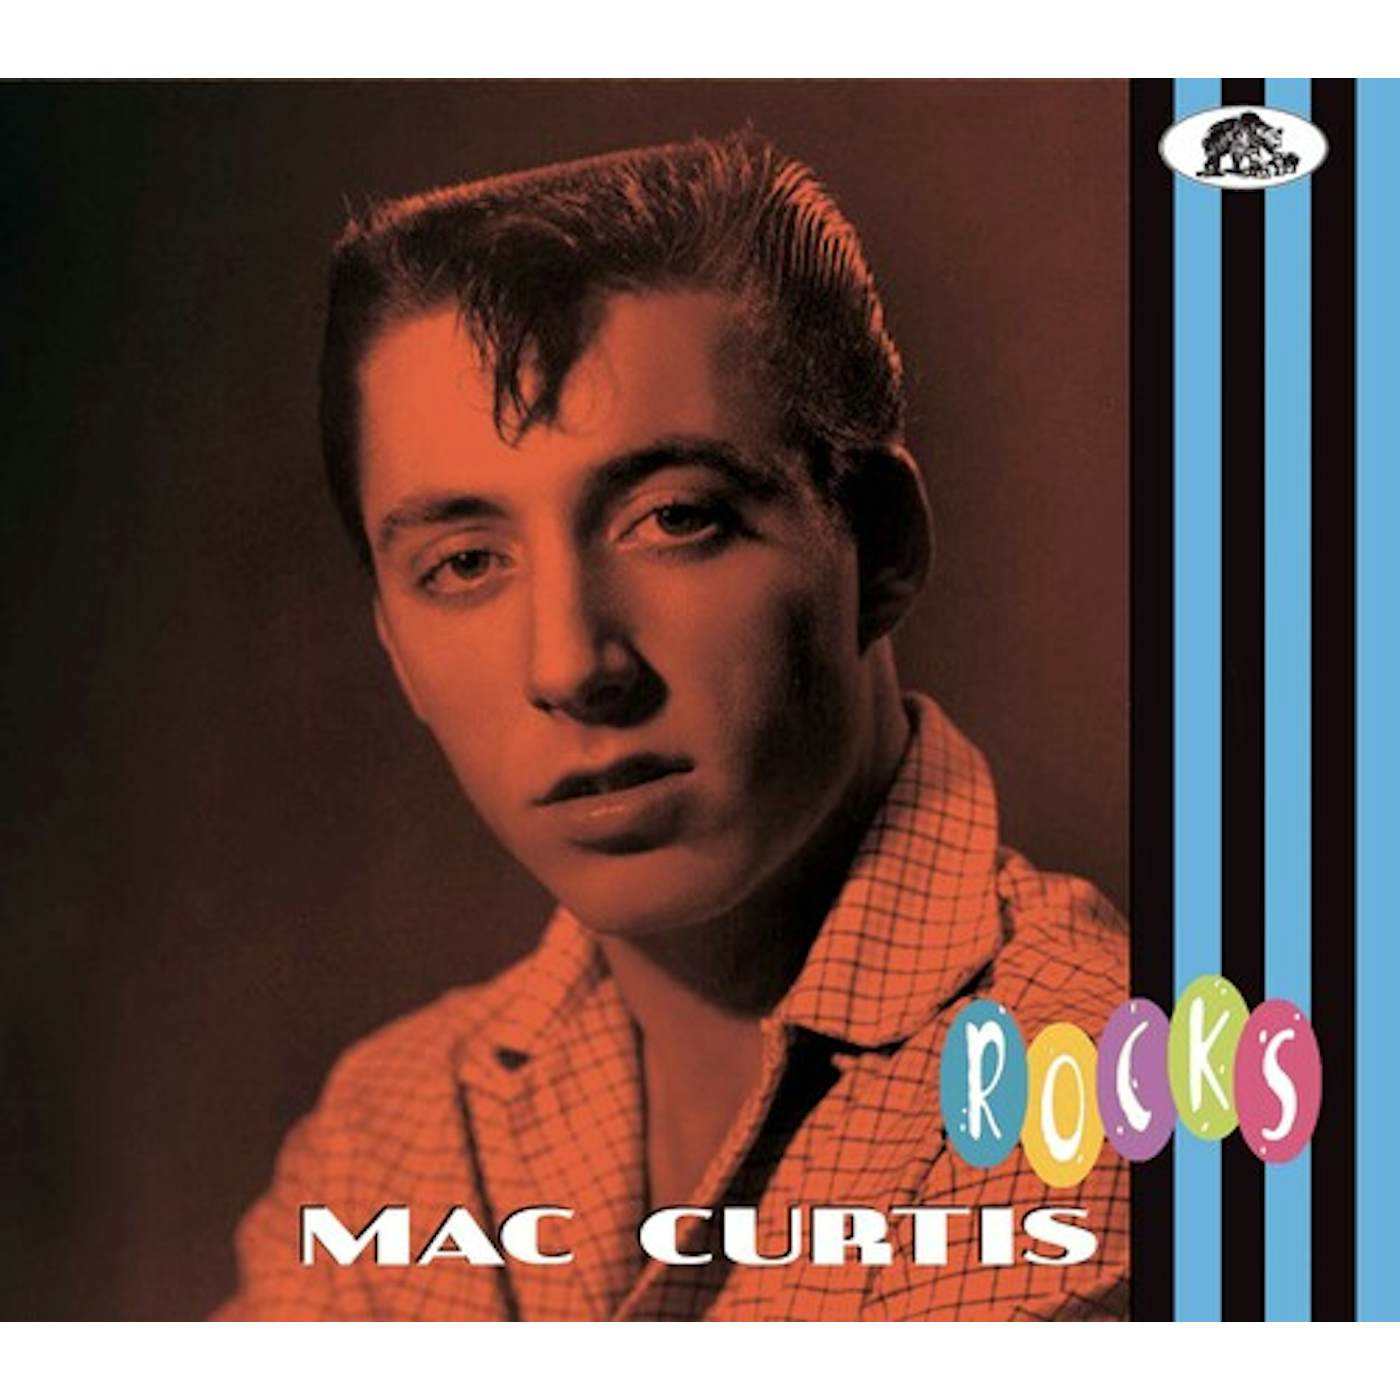 Mac Curtis ROCKS CD